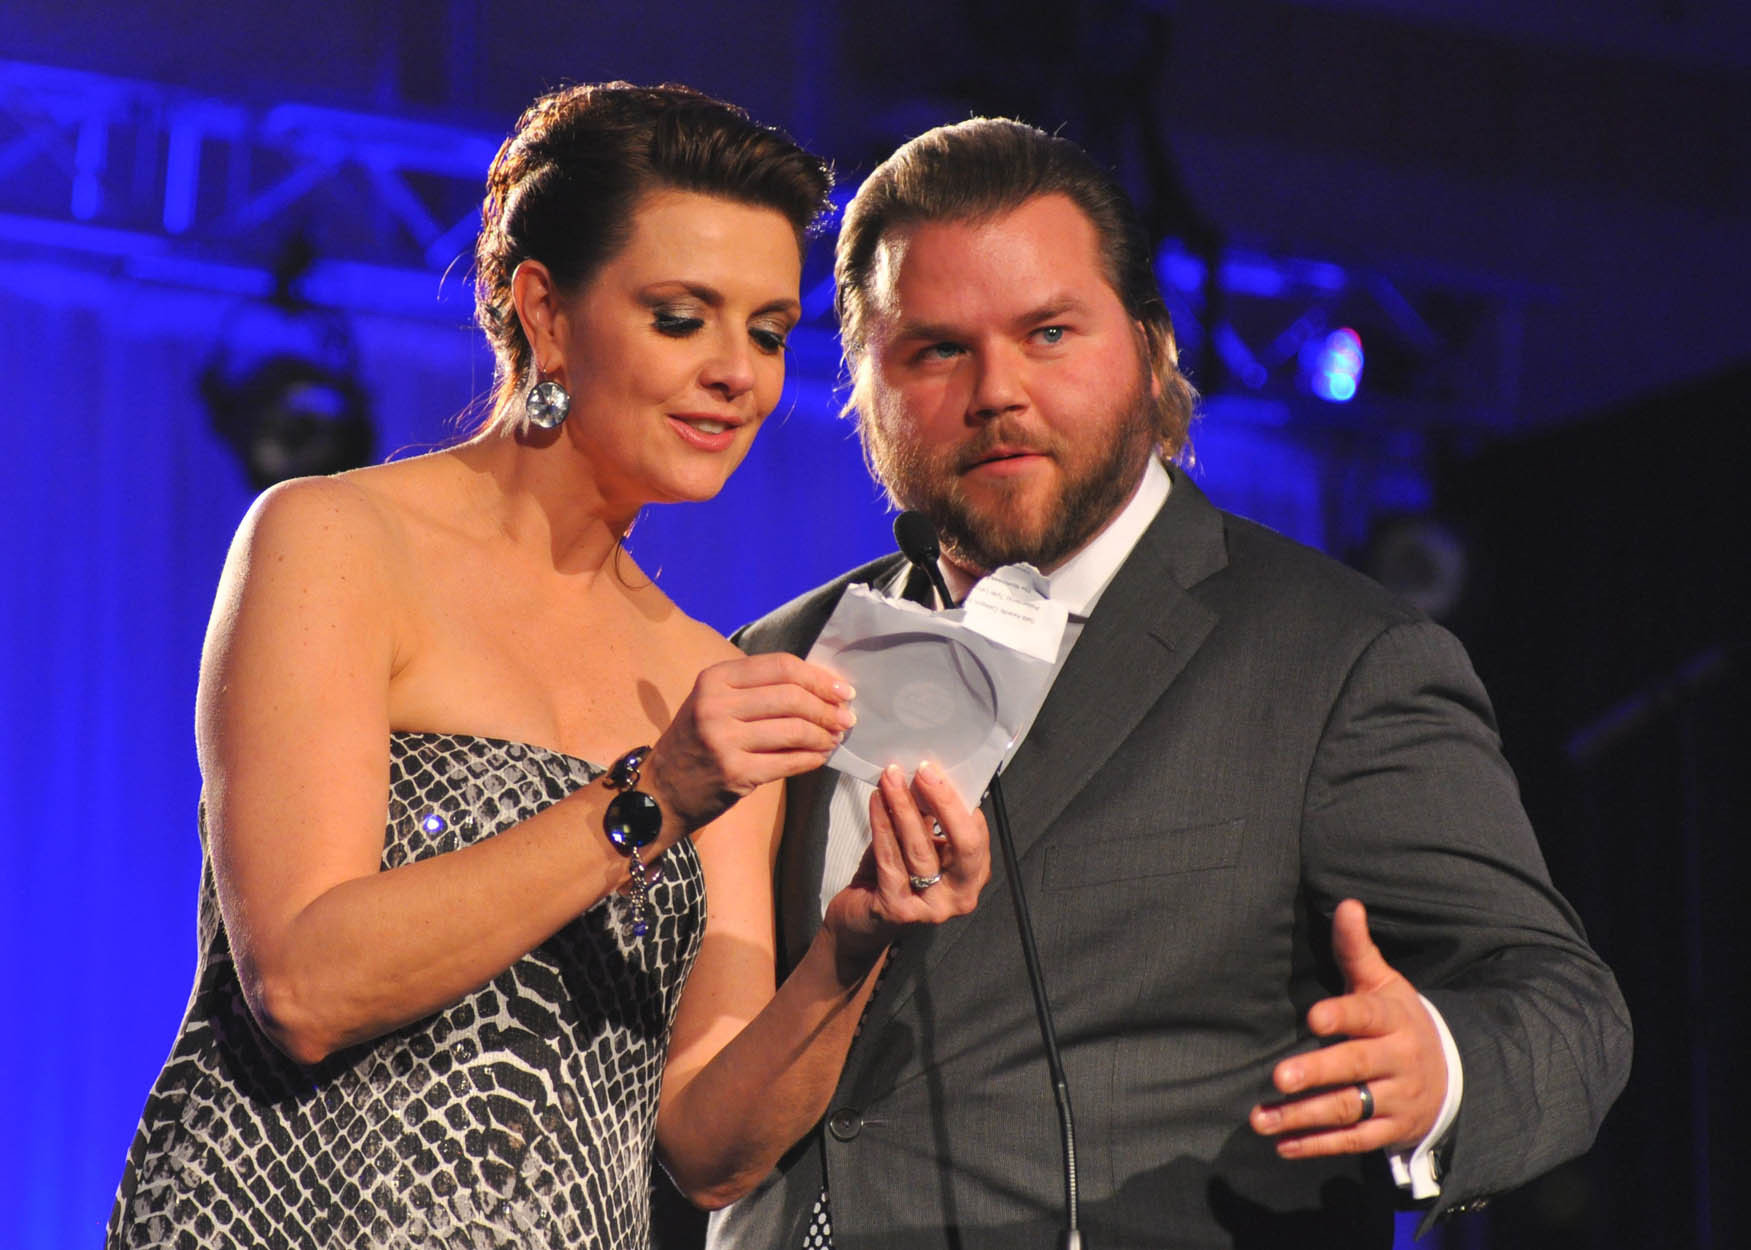 Amanda Tapping & Tyler Labine at the 2010 Leo Awards